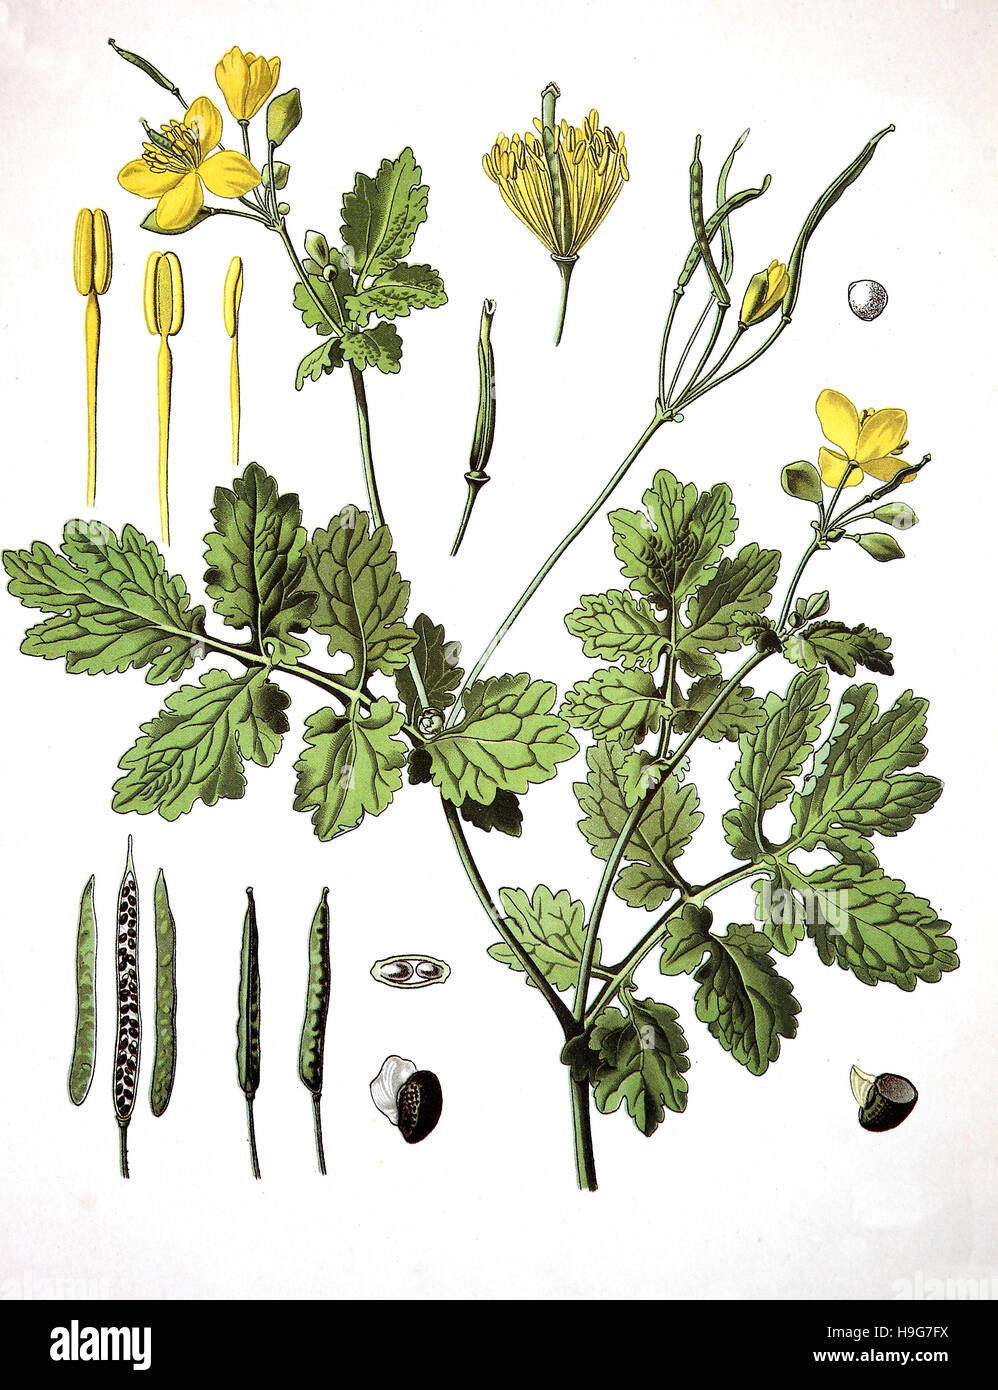 Helidonium majus, conocida comúnmente como mayor celidonia o tetterwort, tetterwort, nipplewort o swallowwort. Plantas medicinales Foto de stock